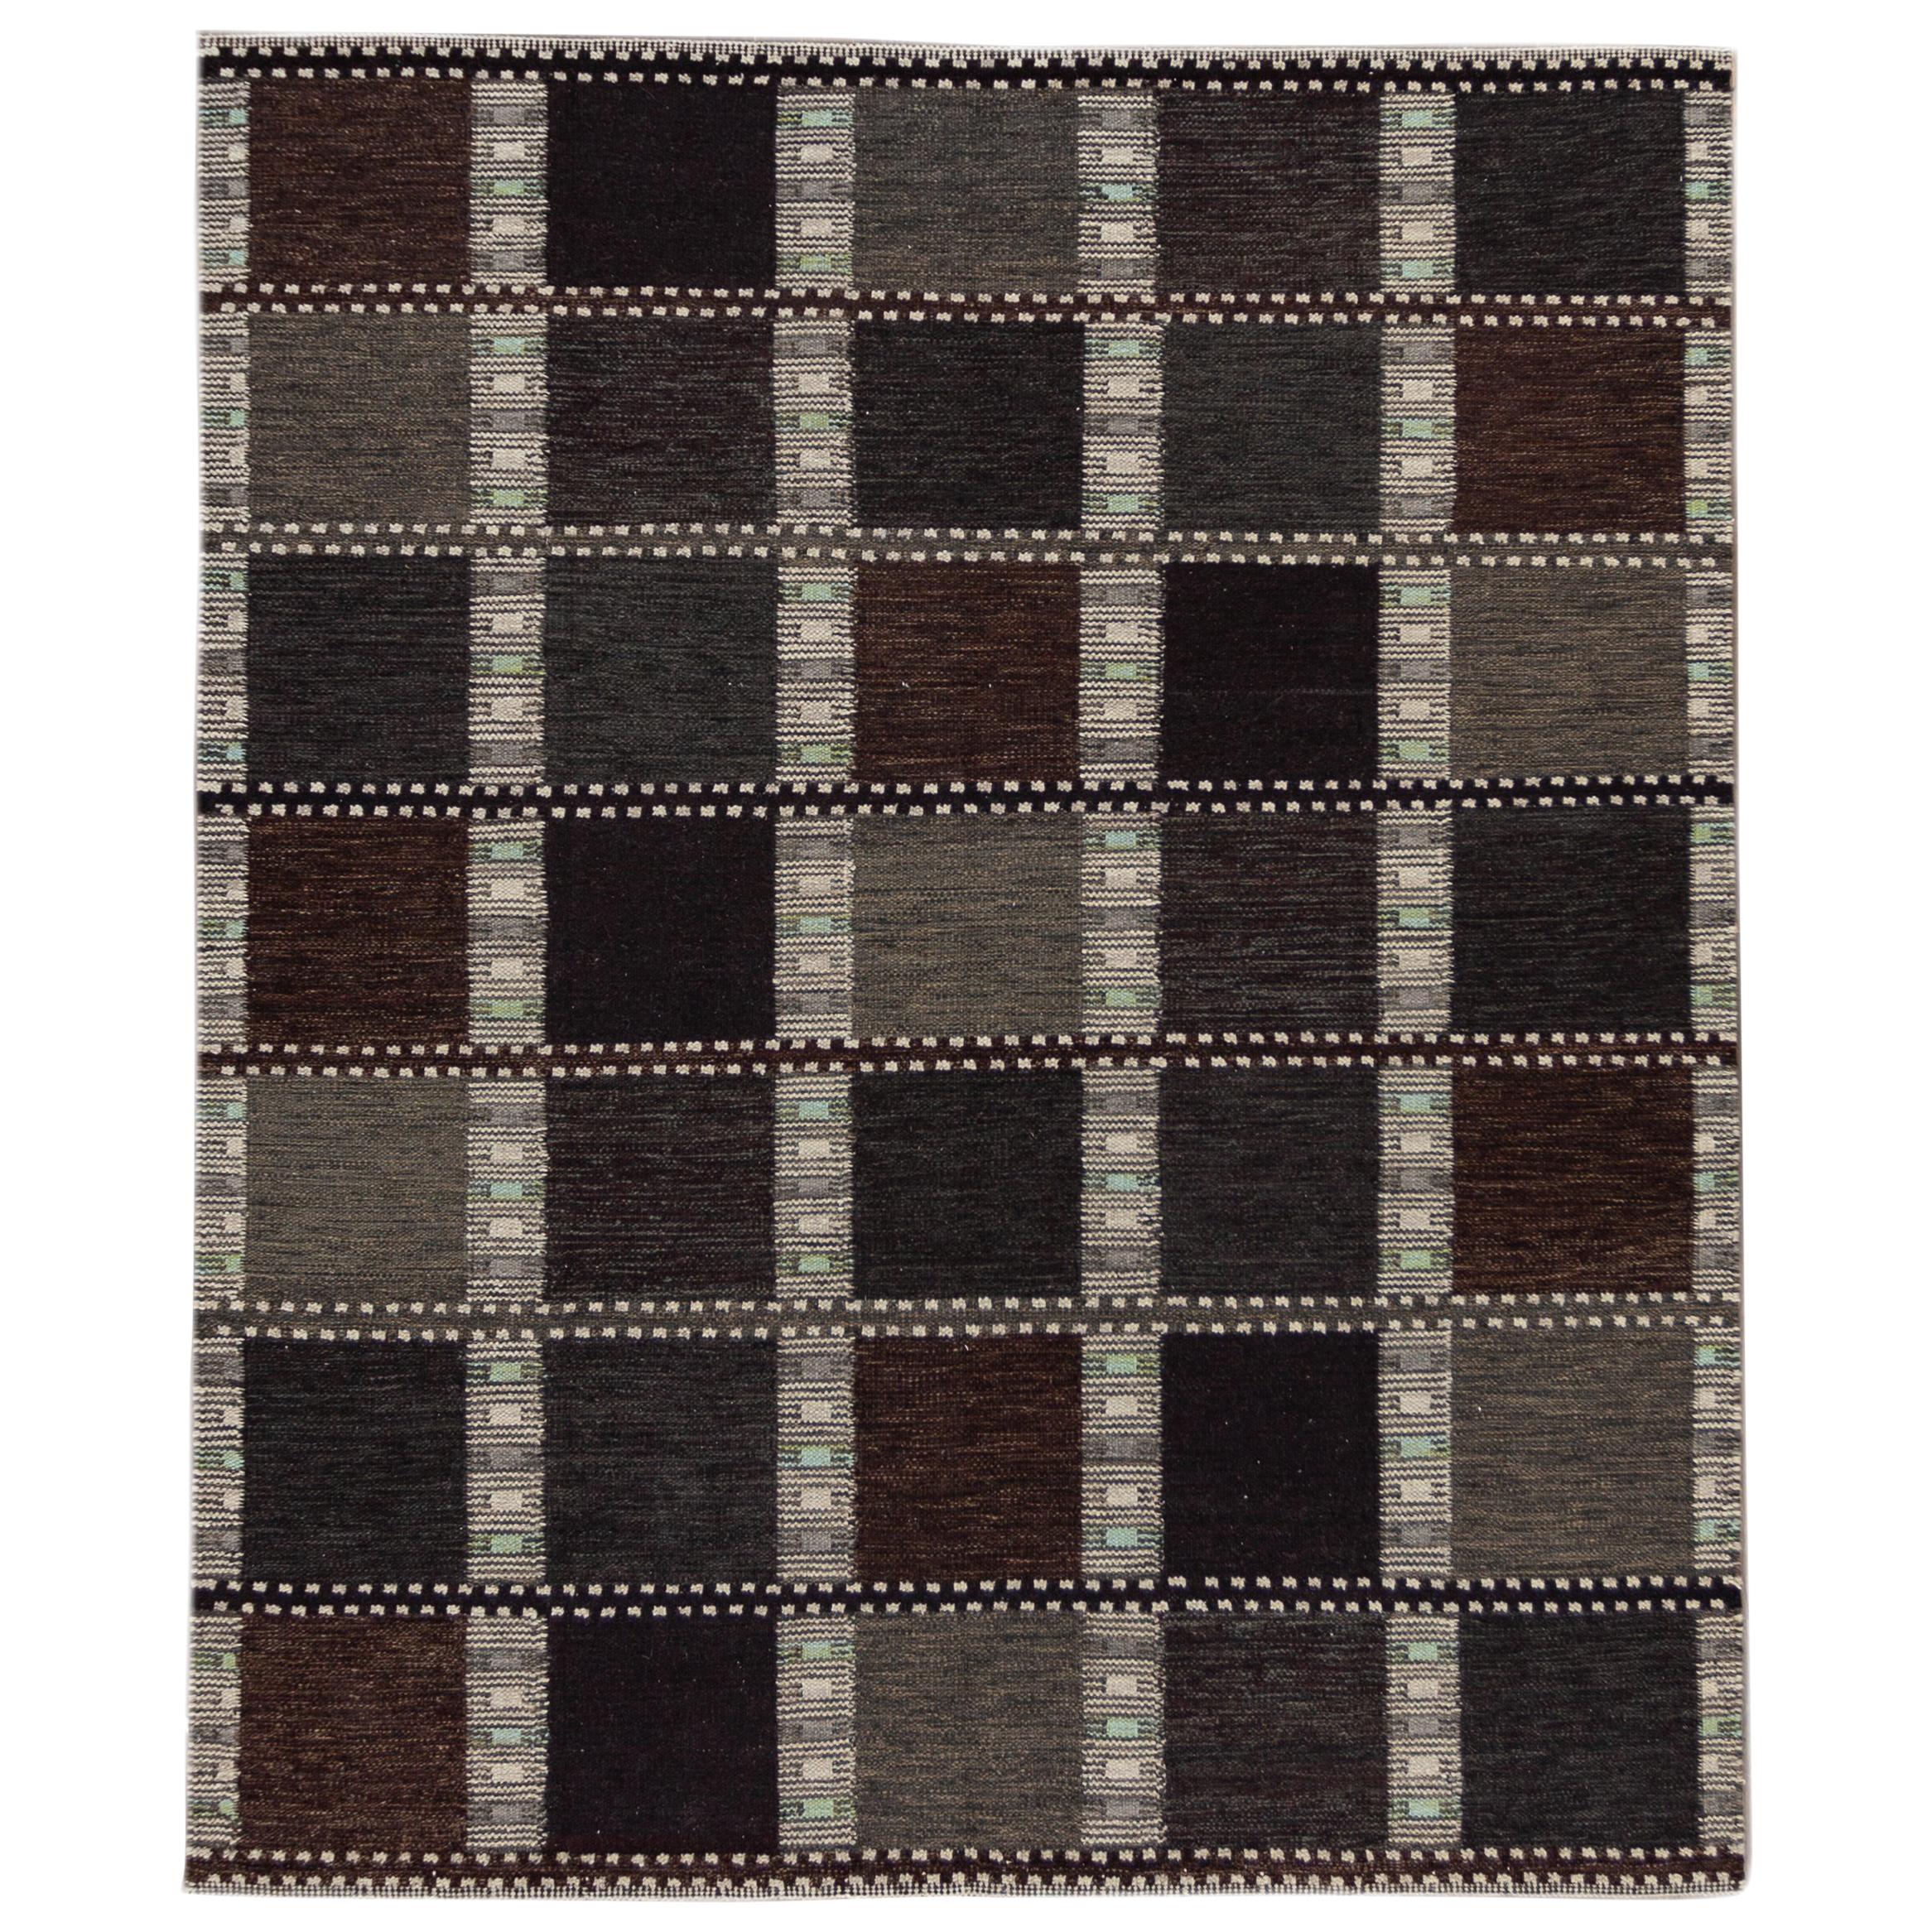 21st Century Modern Scandinavian-Style Flat-Weave Rug